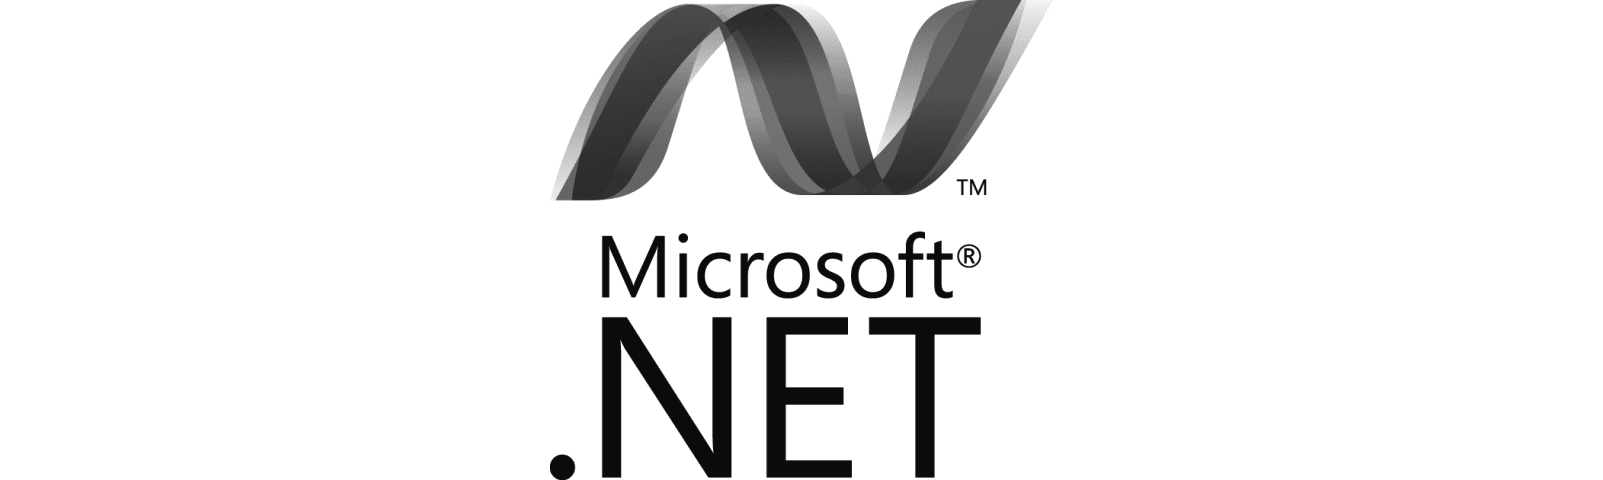 Microsoft.Net logo